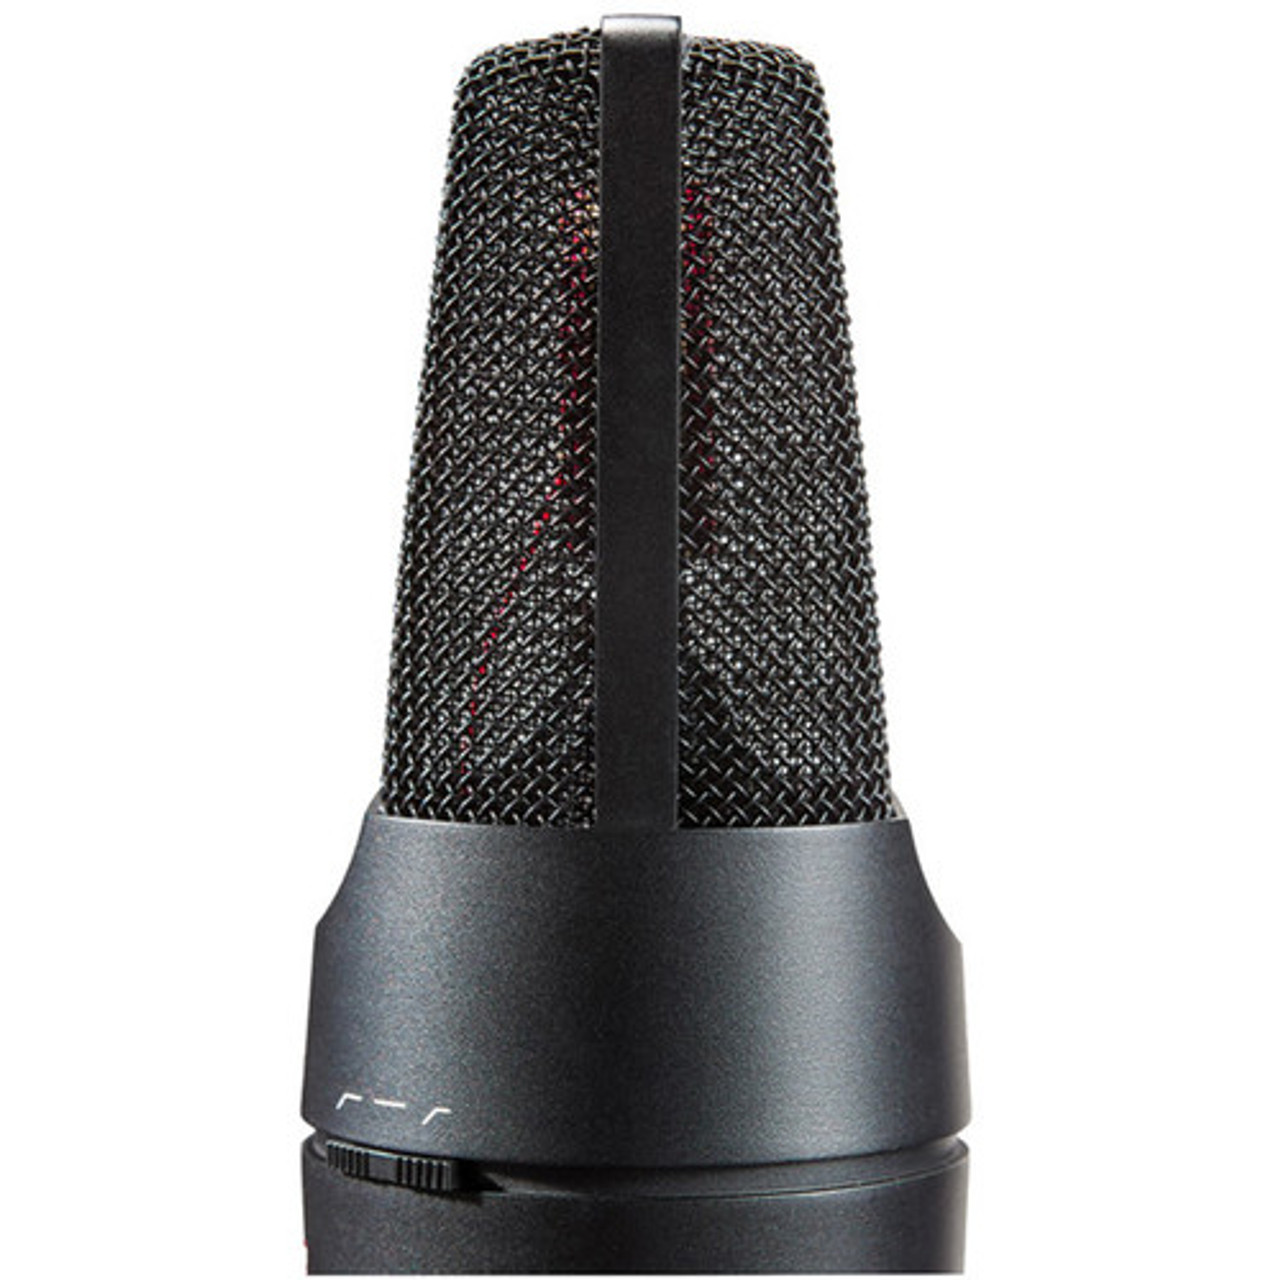 sE Electronics X1 S Studio Bundle Condenser Microphone Vocal Recording Package with Reflection Filter (X1-S-STUDIO-BUNDLE-U)